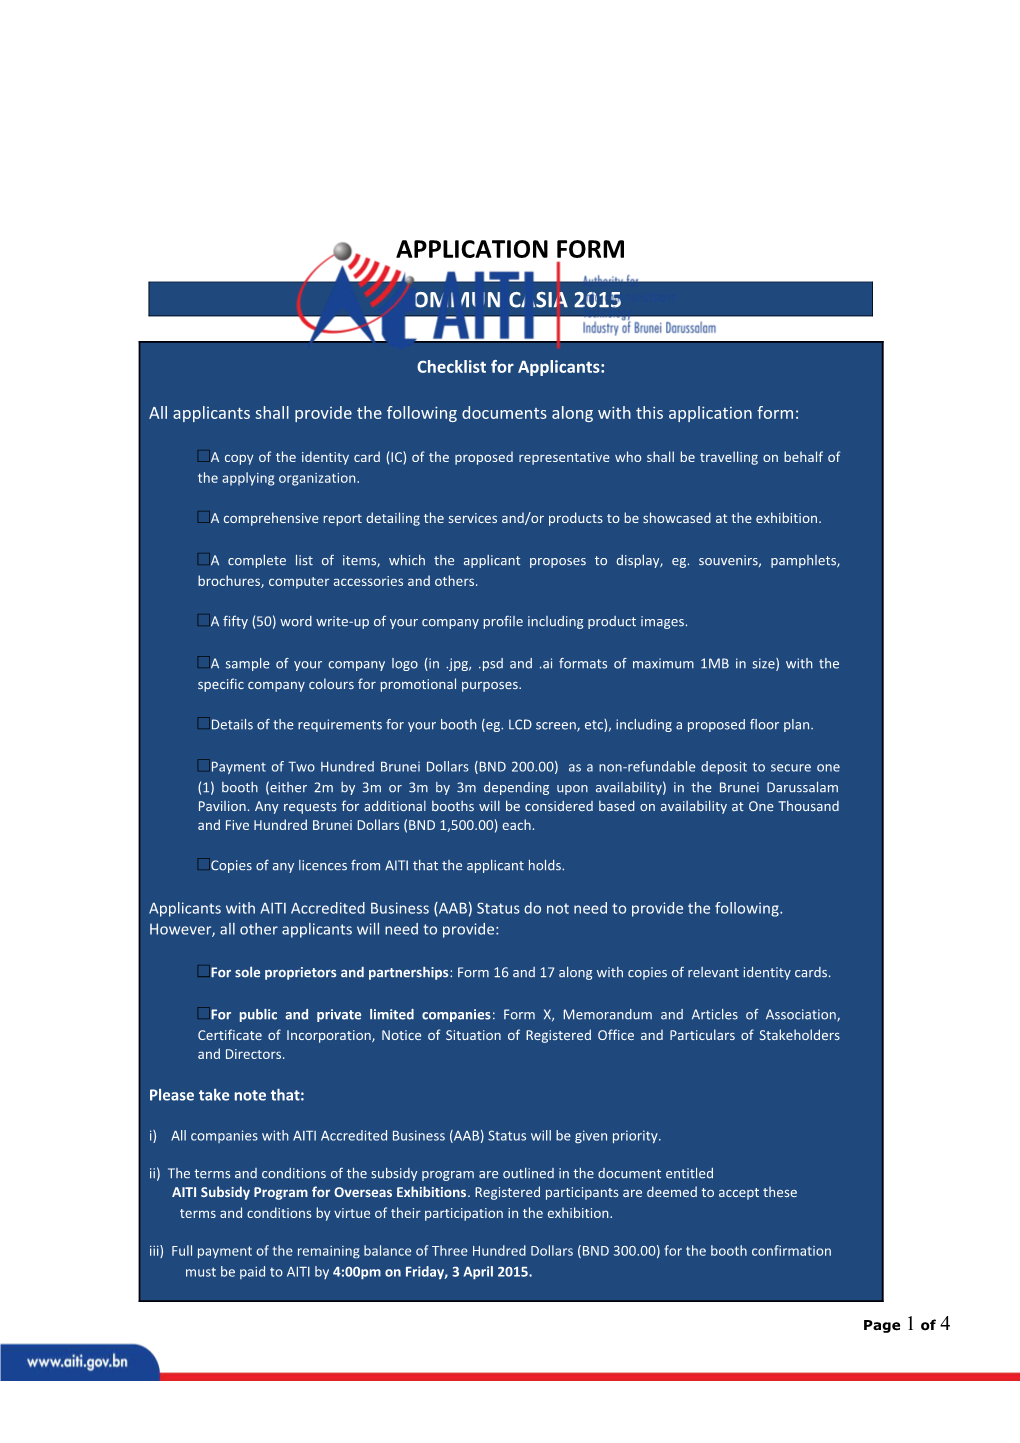 Communicasia 2015 Application Form